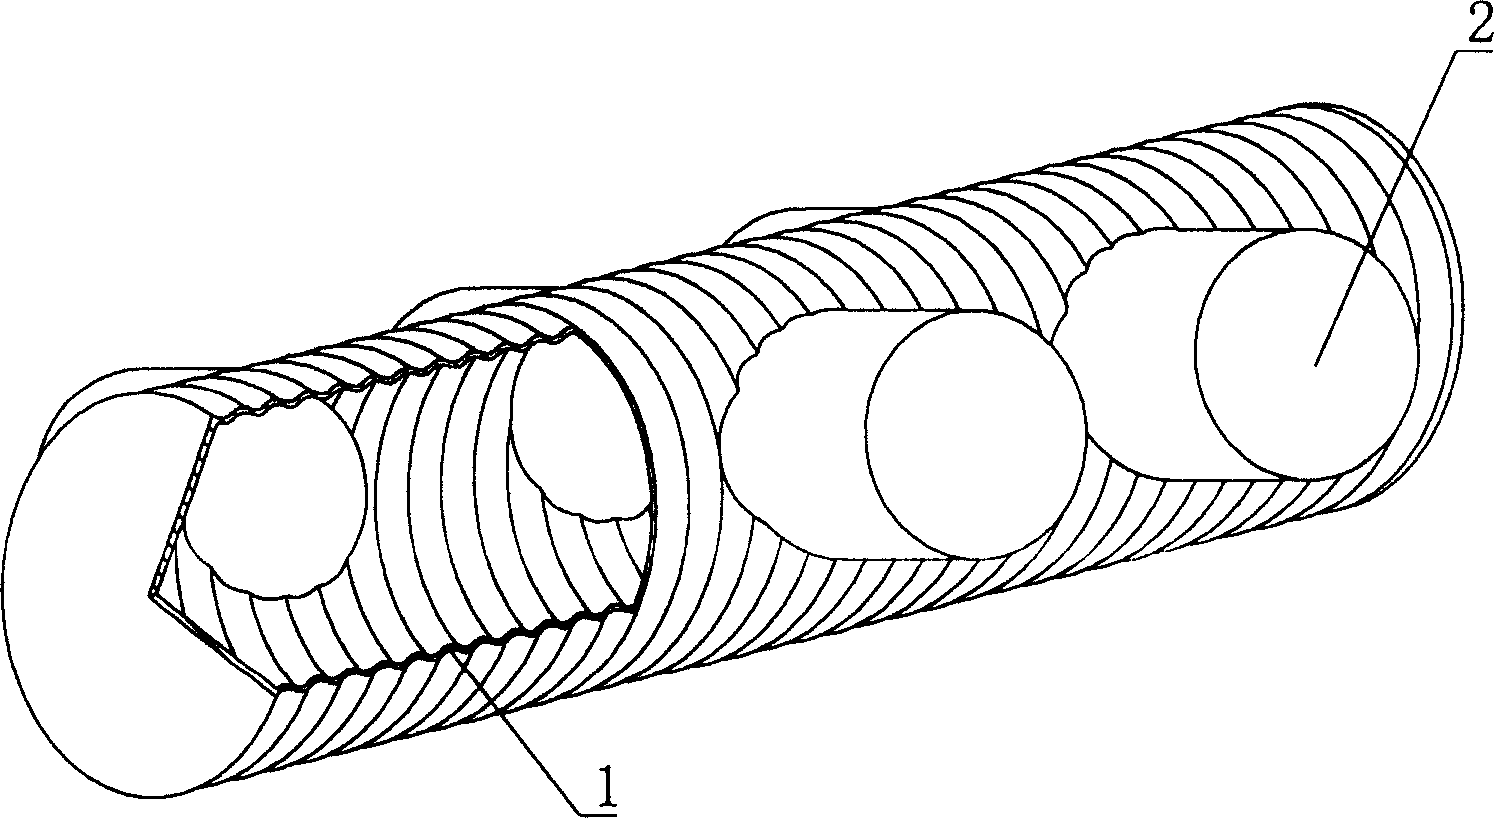 Light tube for filling cast-in-situ steel reinforced concrete